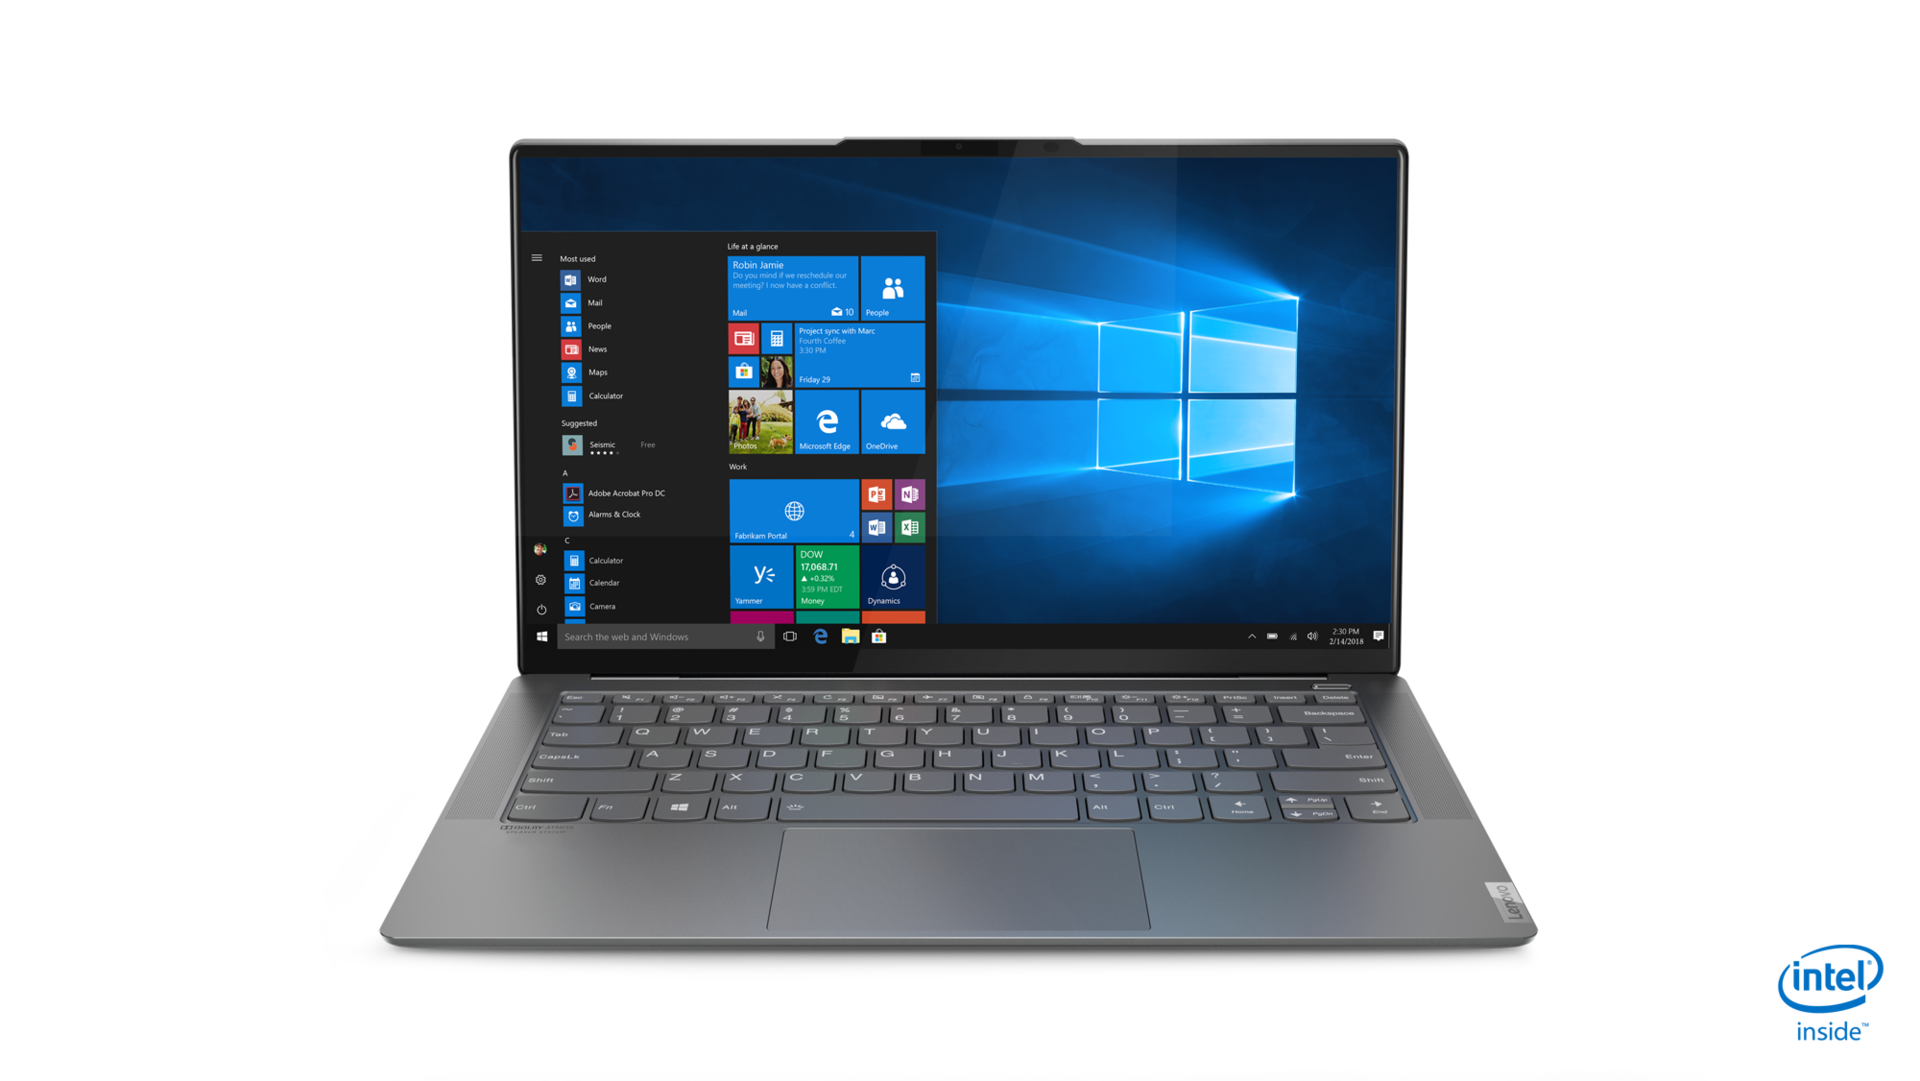 Lenovo Yoga S940 Ultradunnes Premium Yoga Laptop Kommt Ab Mai Mit 4k Hdr Bildschirm Hands On Bilder Notebookcheck Com News